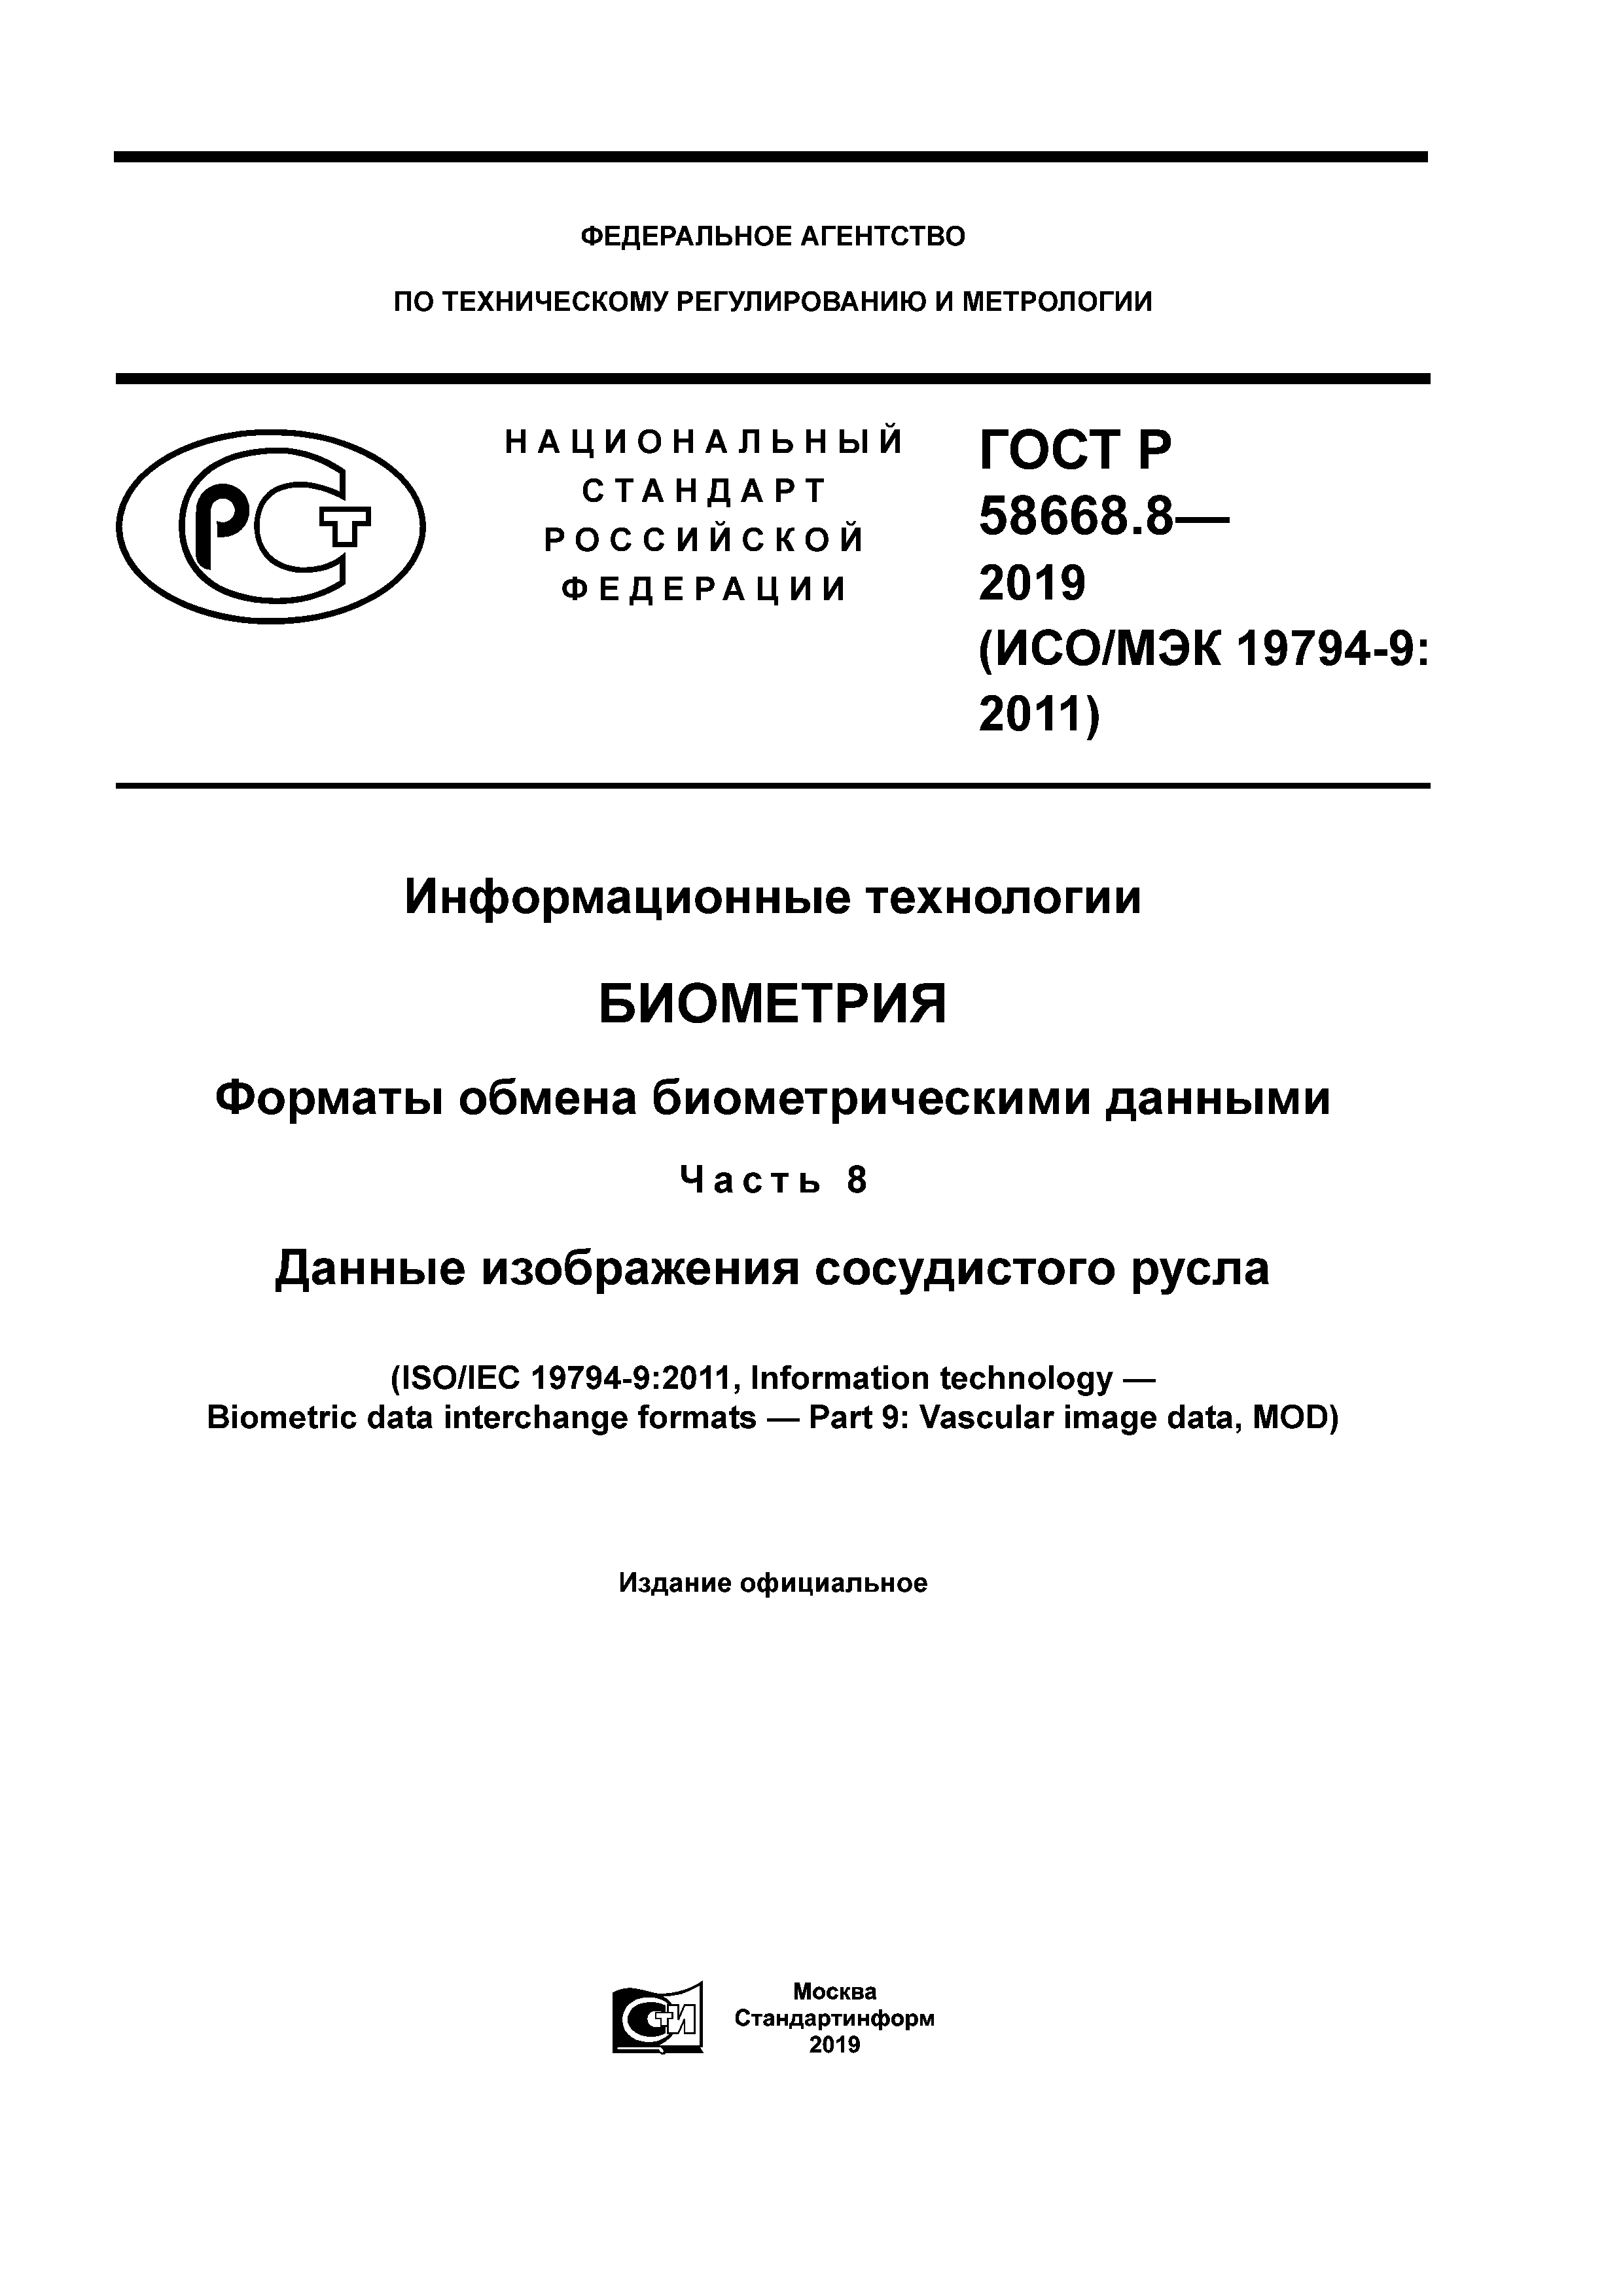 ГОСТ Р 58668.8-2019